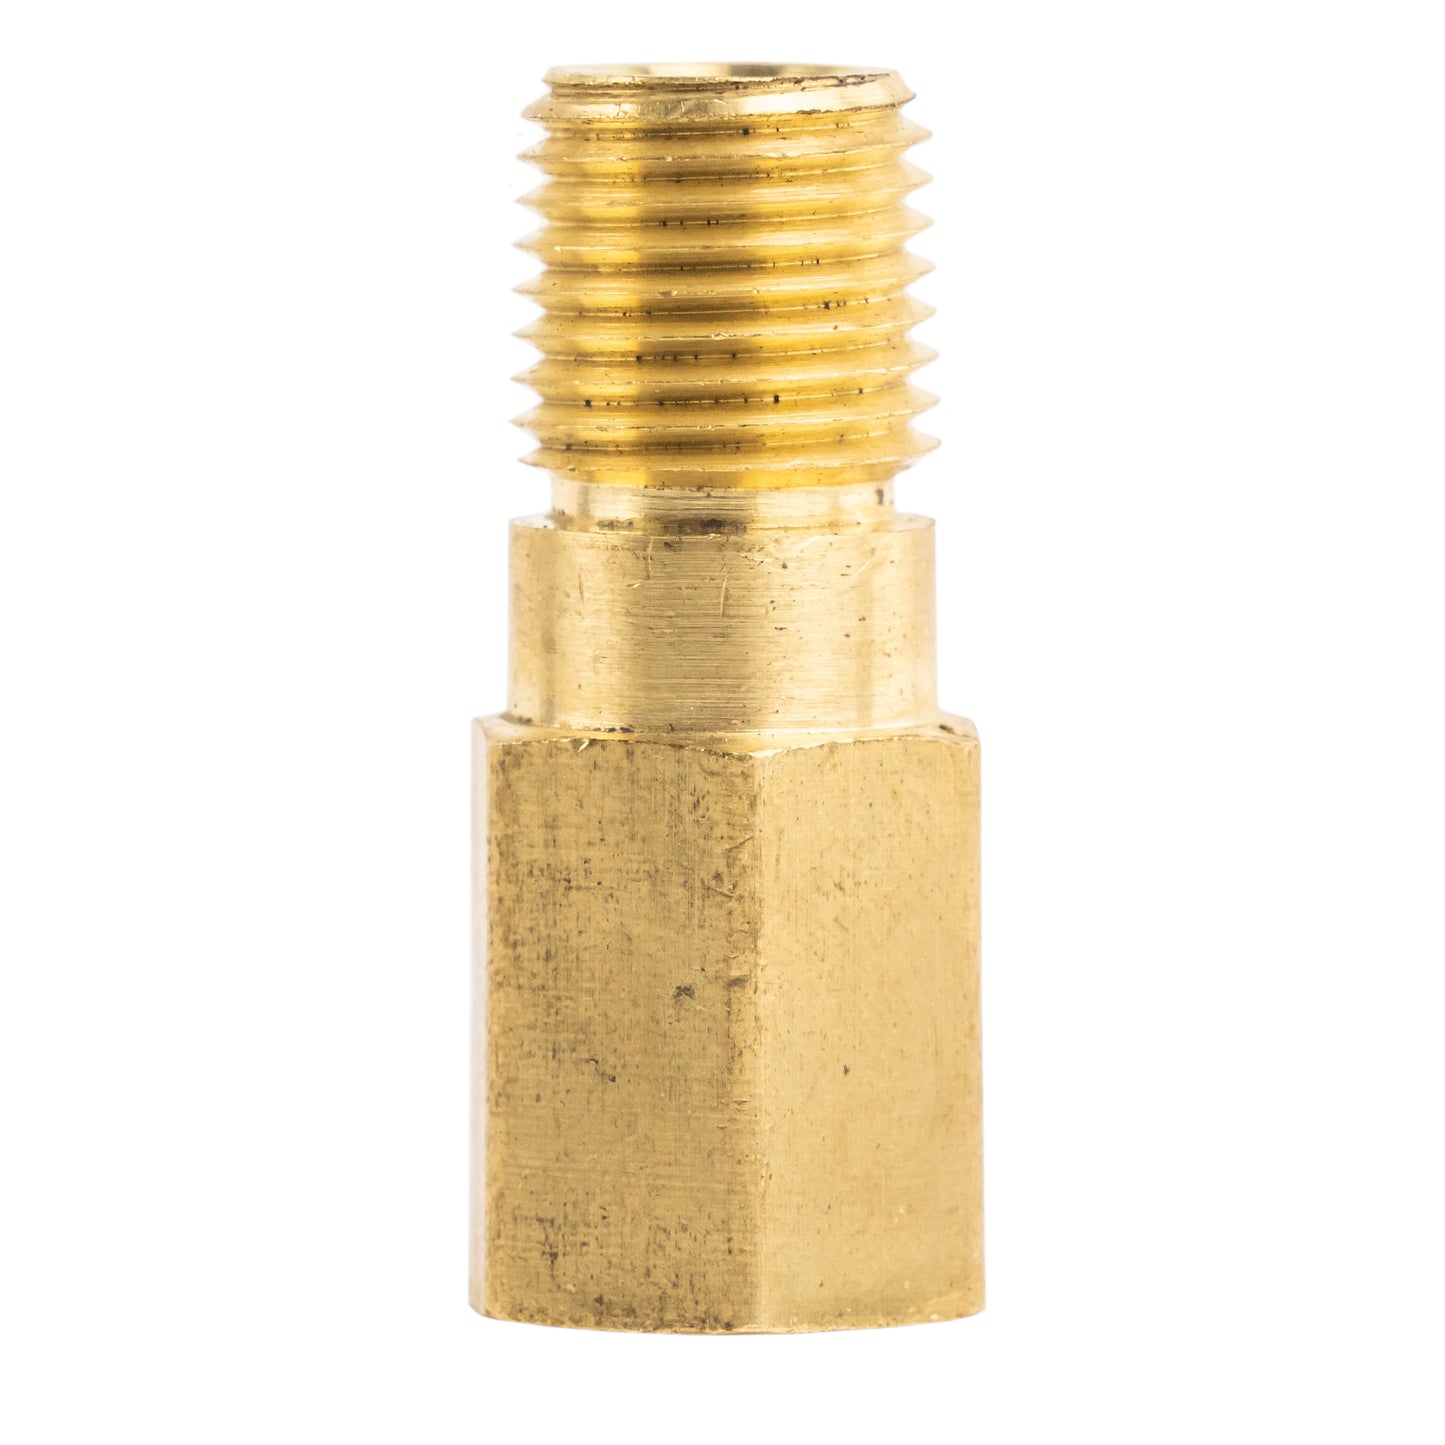 1/4" NPT Extender Pipe Fitting 1-9/16" Long Solid Brass Pressure Gauge Adapter